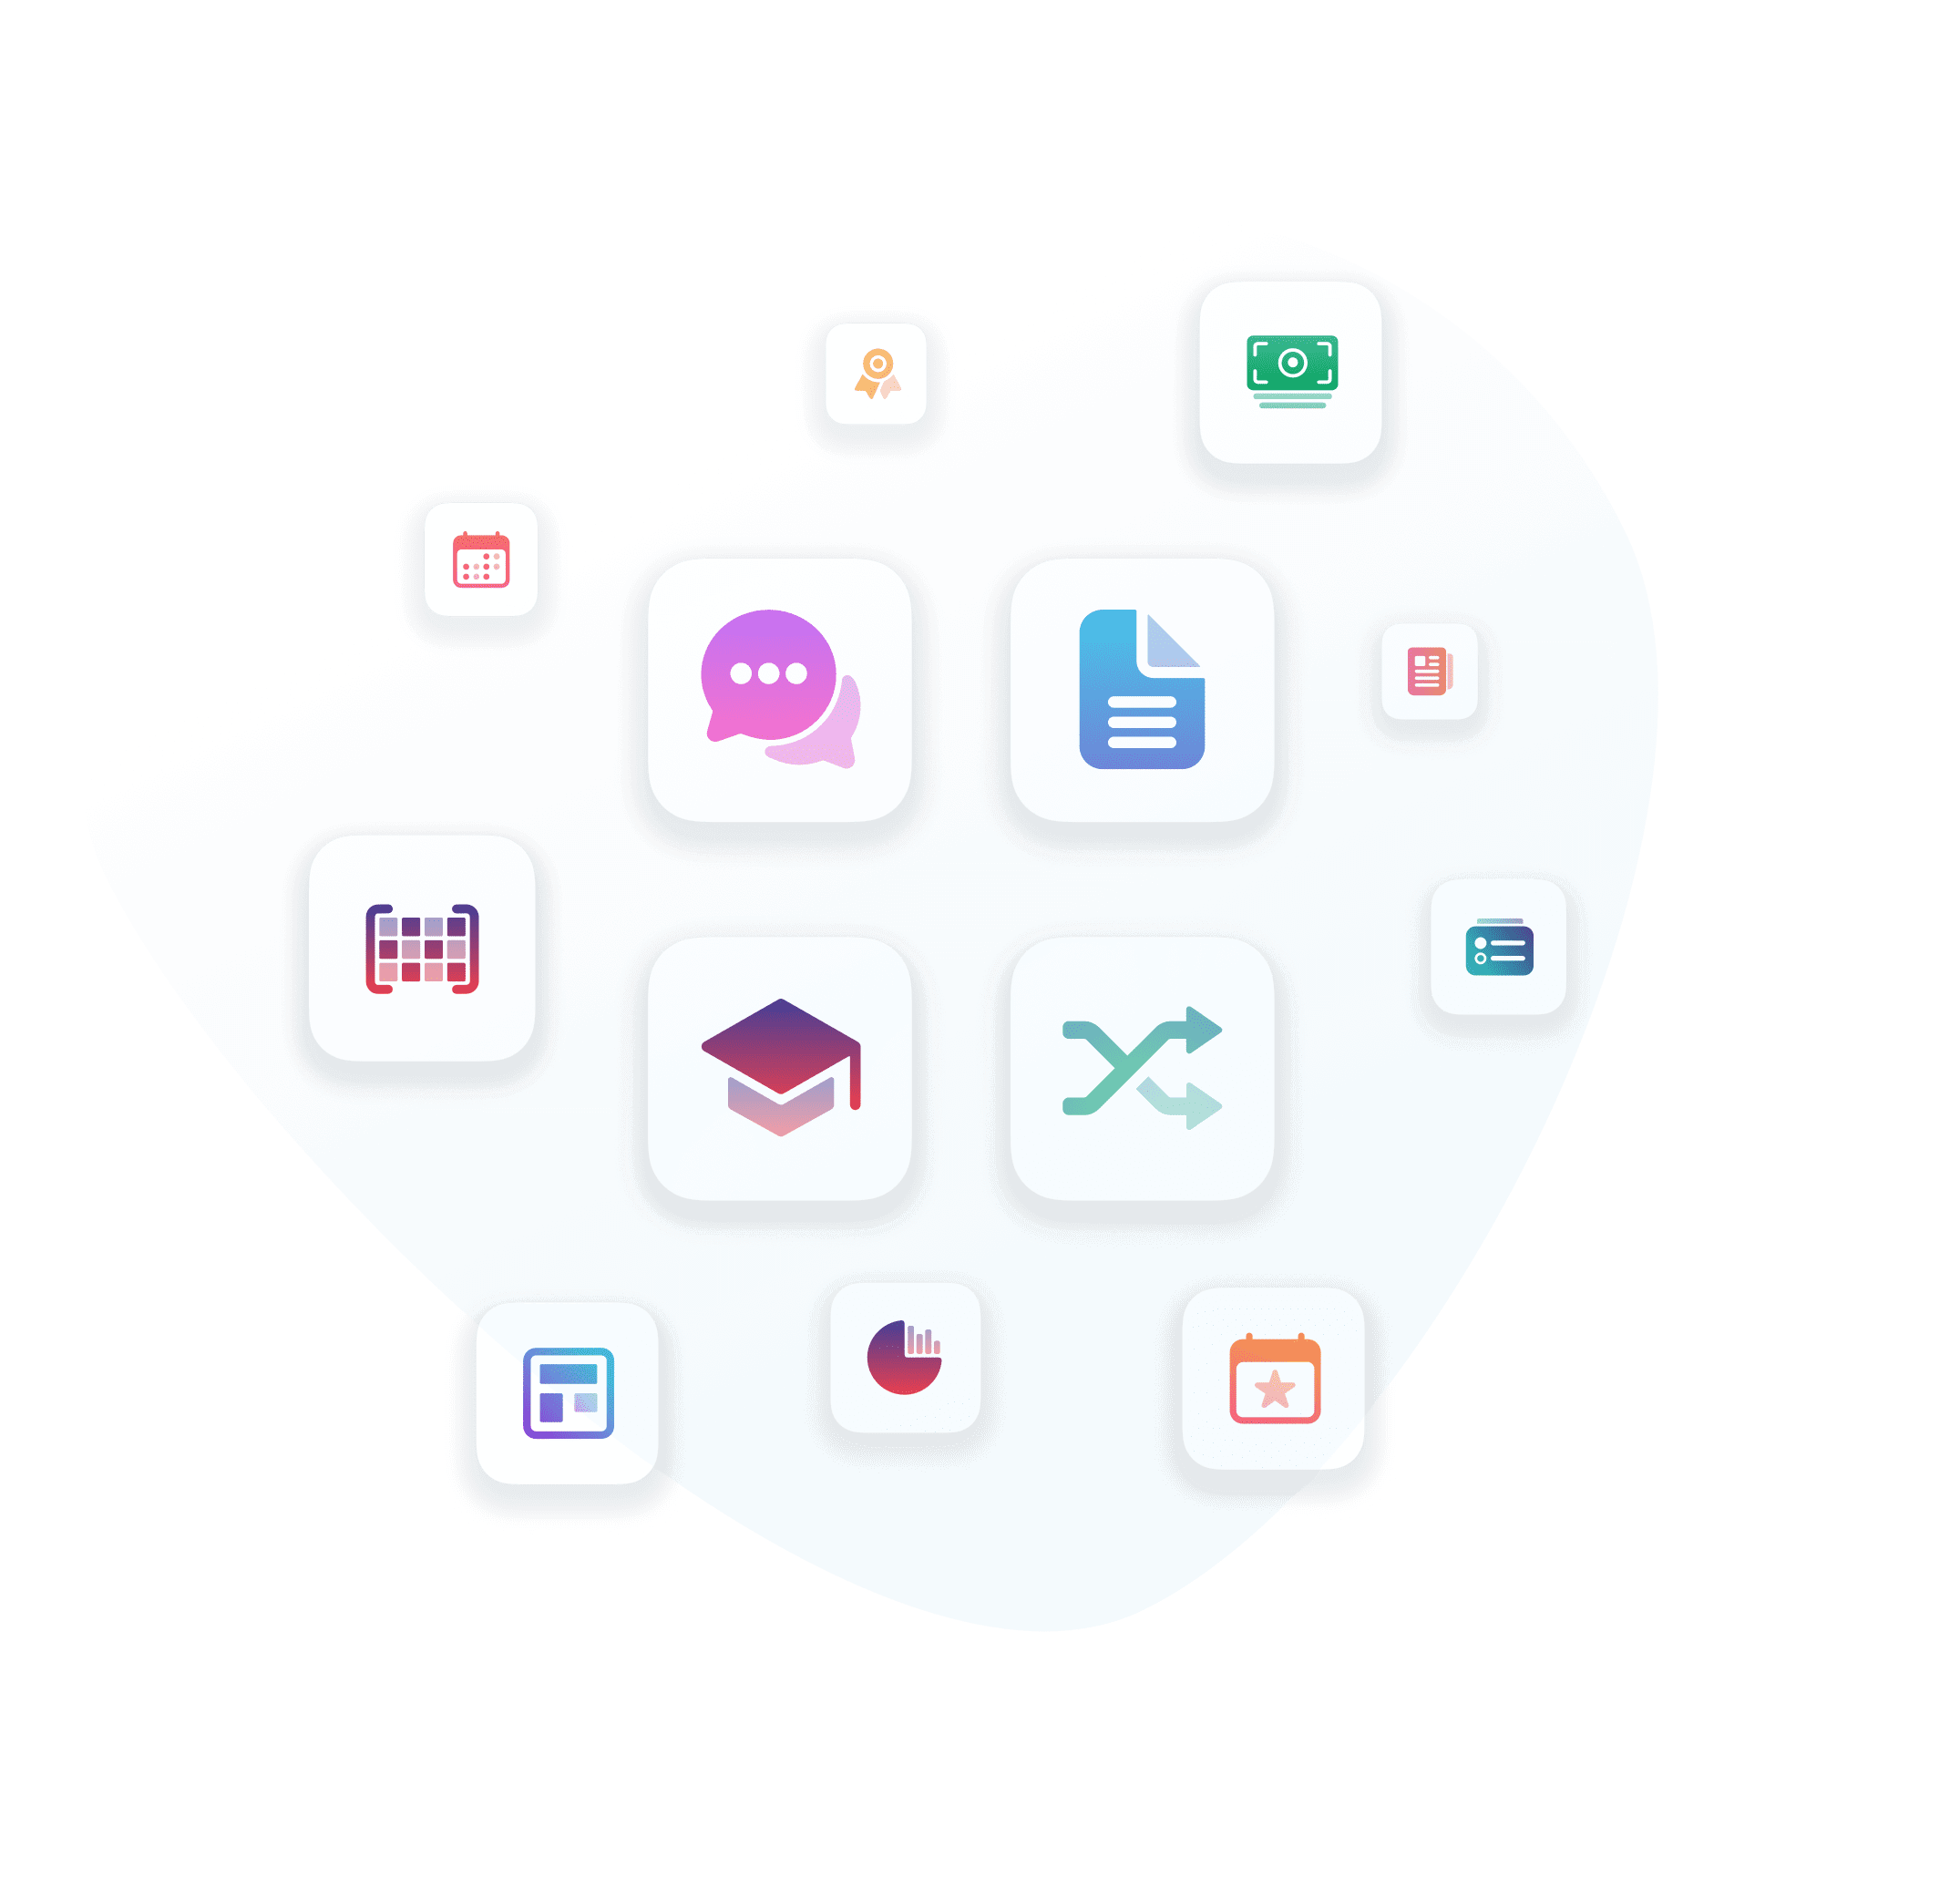 Claormentis app icons graphics of various sizes